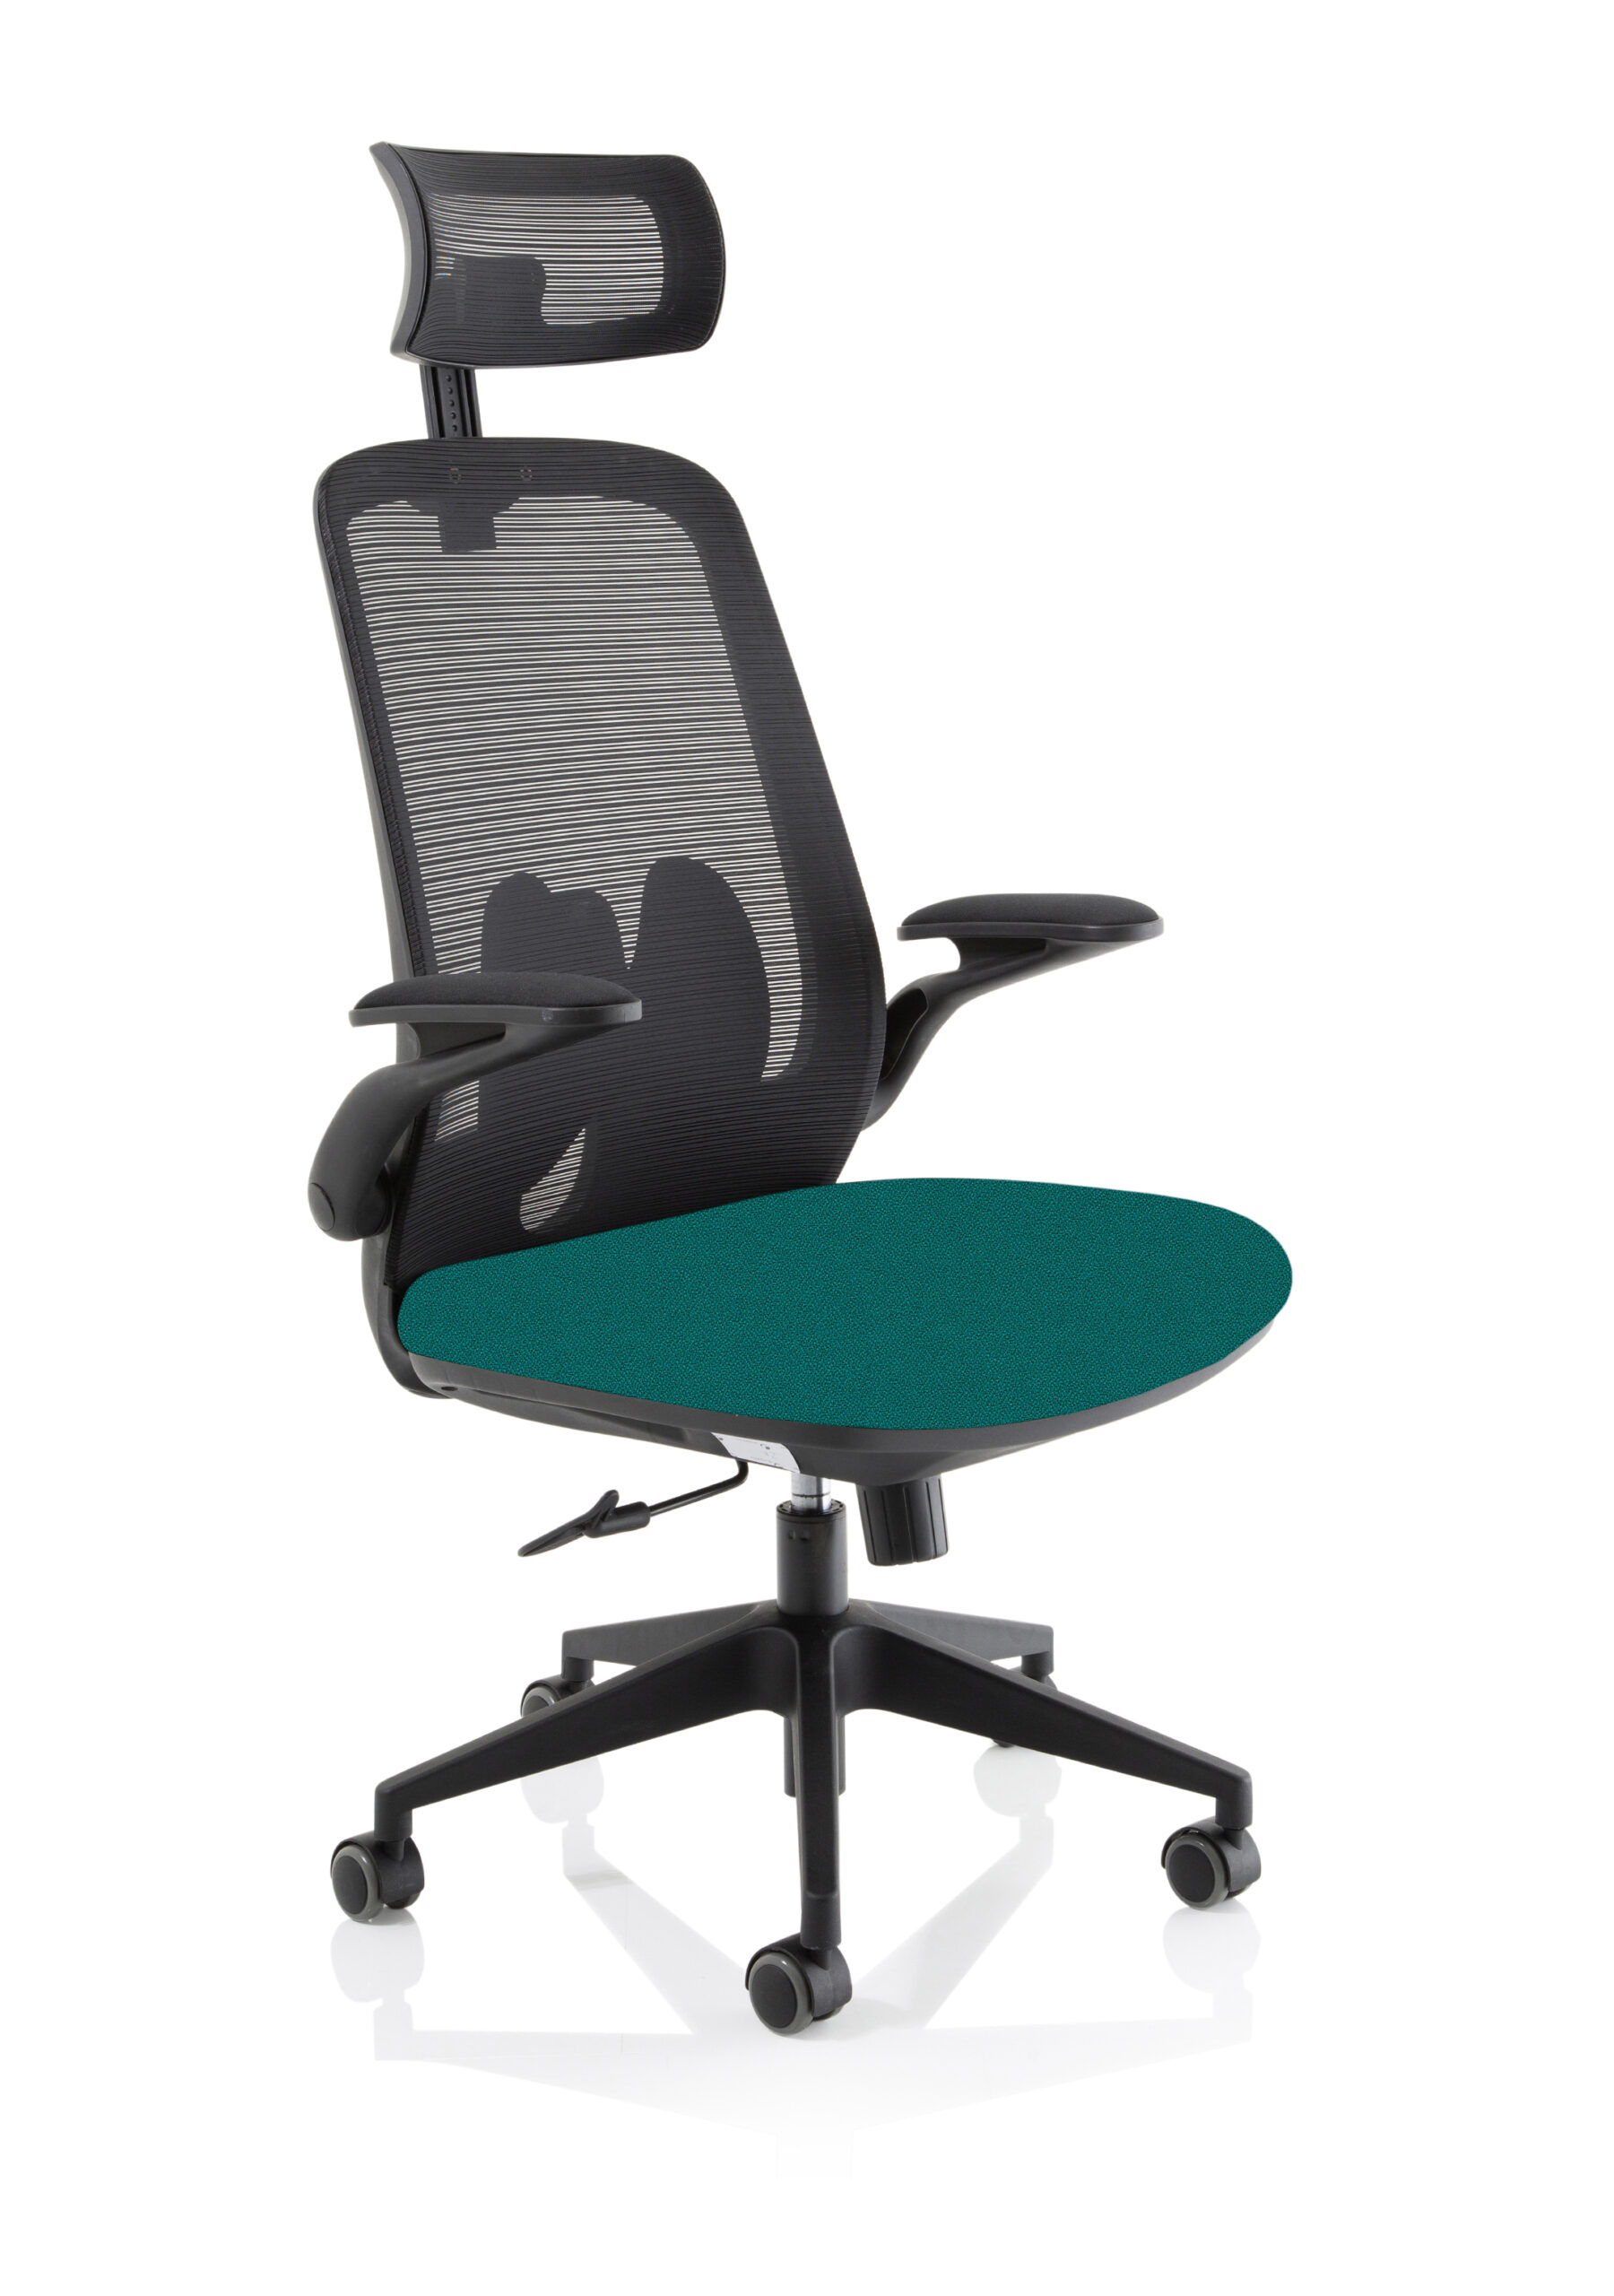 Lasino Executive Bespoke Fabric Seat Maringa Teal Mesh Chair With Folding Arms